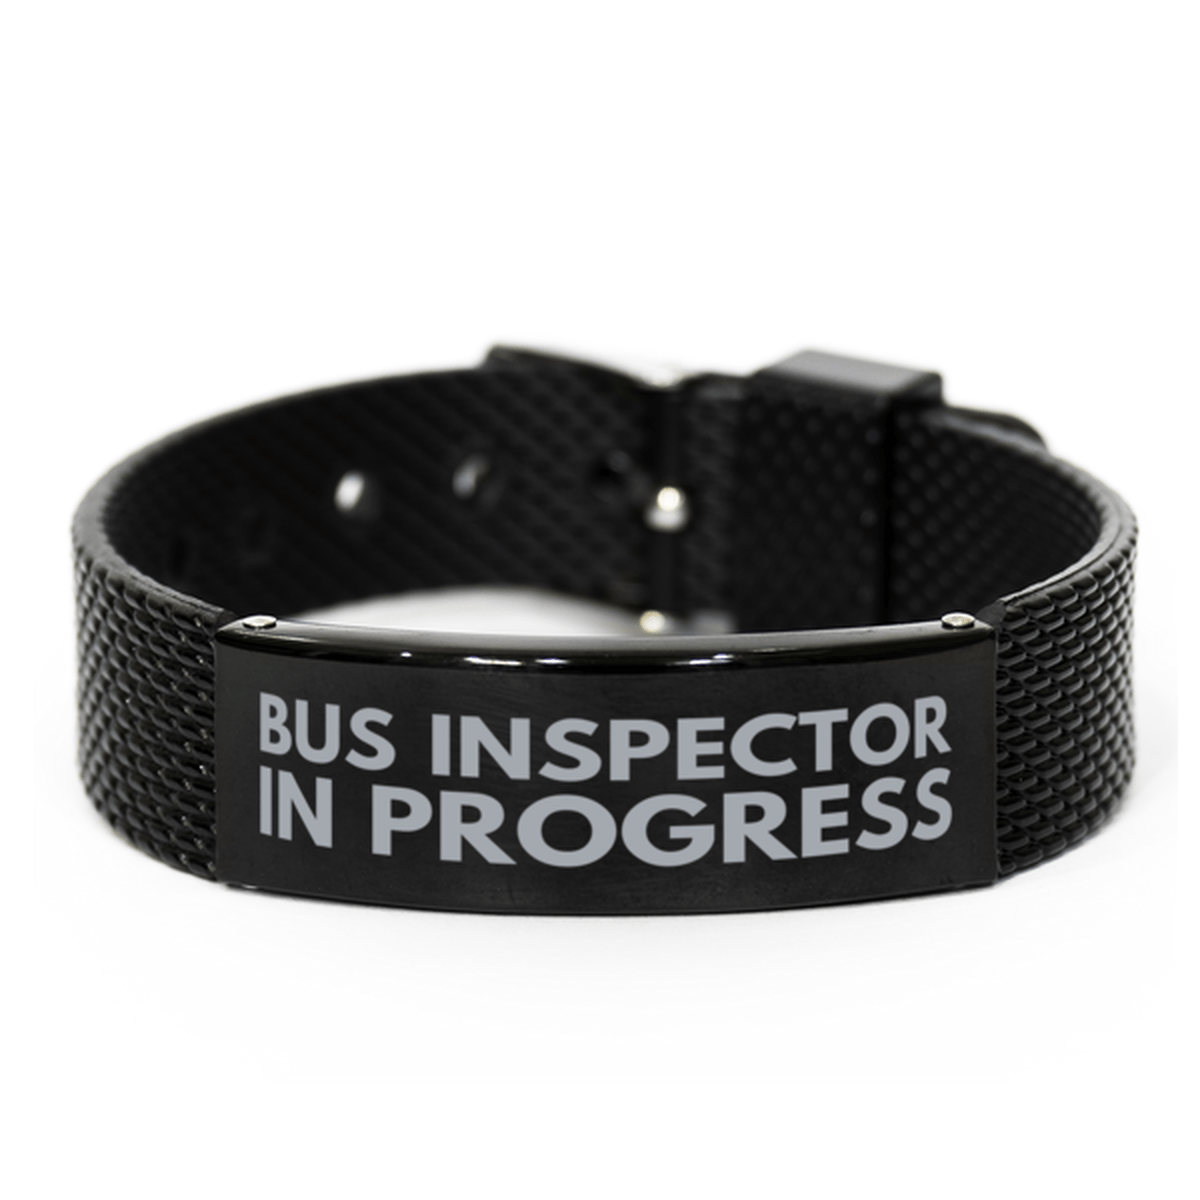 Inspirational Bus Inspector Black Shark Mesh Bracelet, Bus Inspector In Progress, Best Graduation Gifts for Students